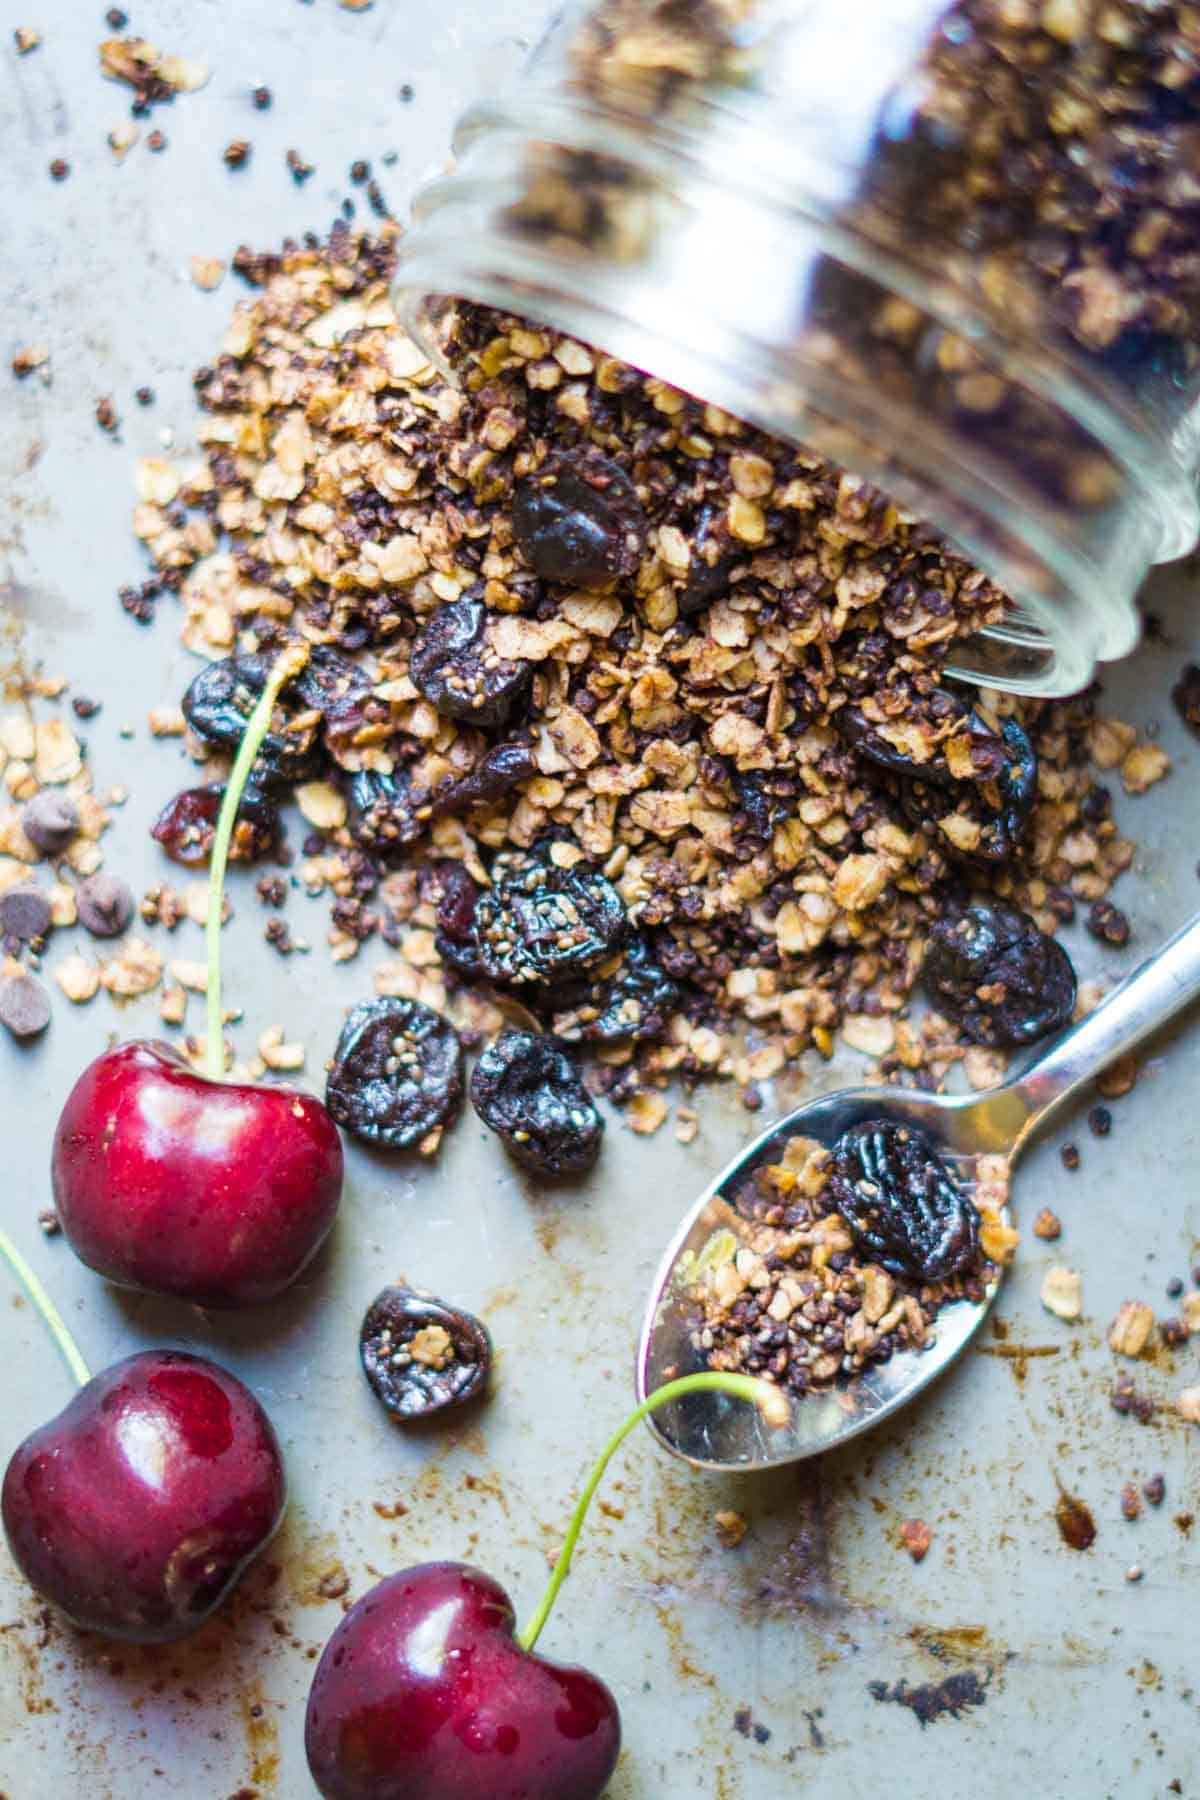 Chocolate Granola with Cherries and Quinoa #breakfast #healthybreakfast #glutenfreerecipes #veganrecipes #lovecrunch #granola